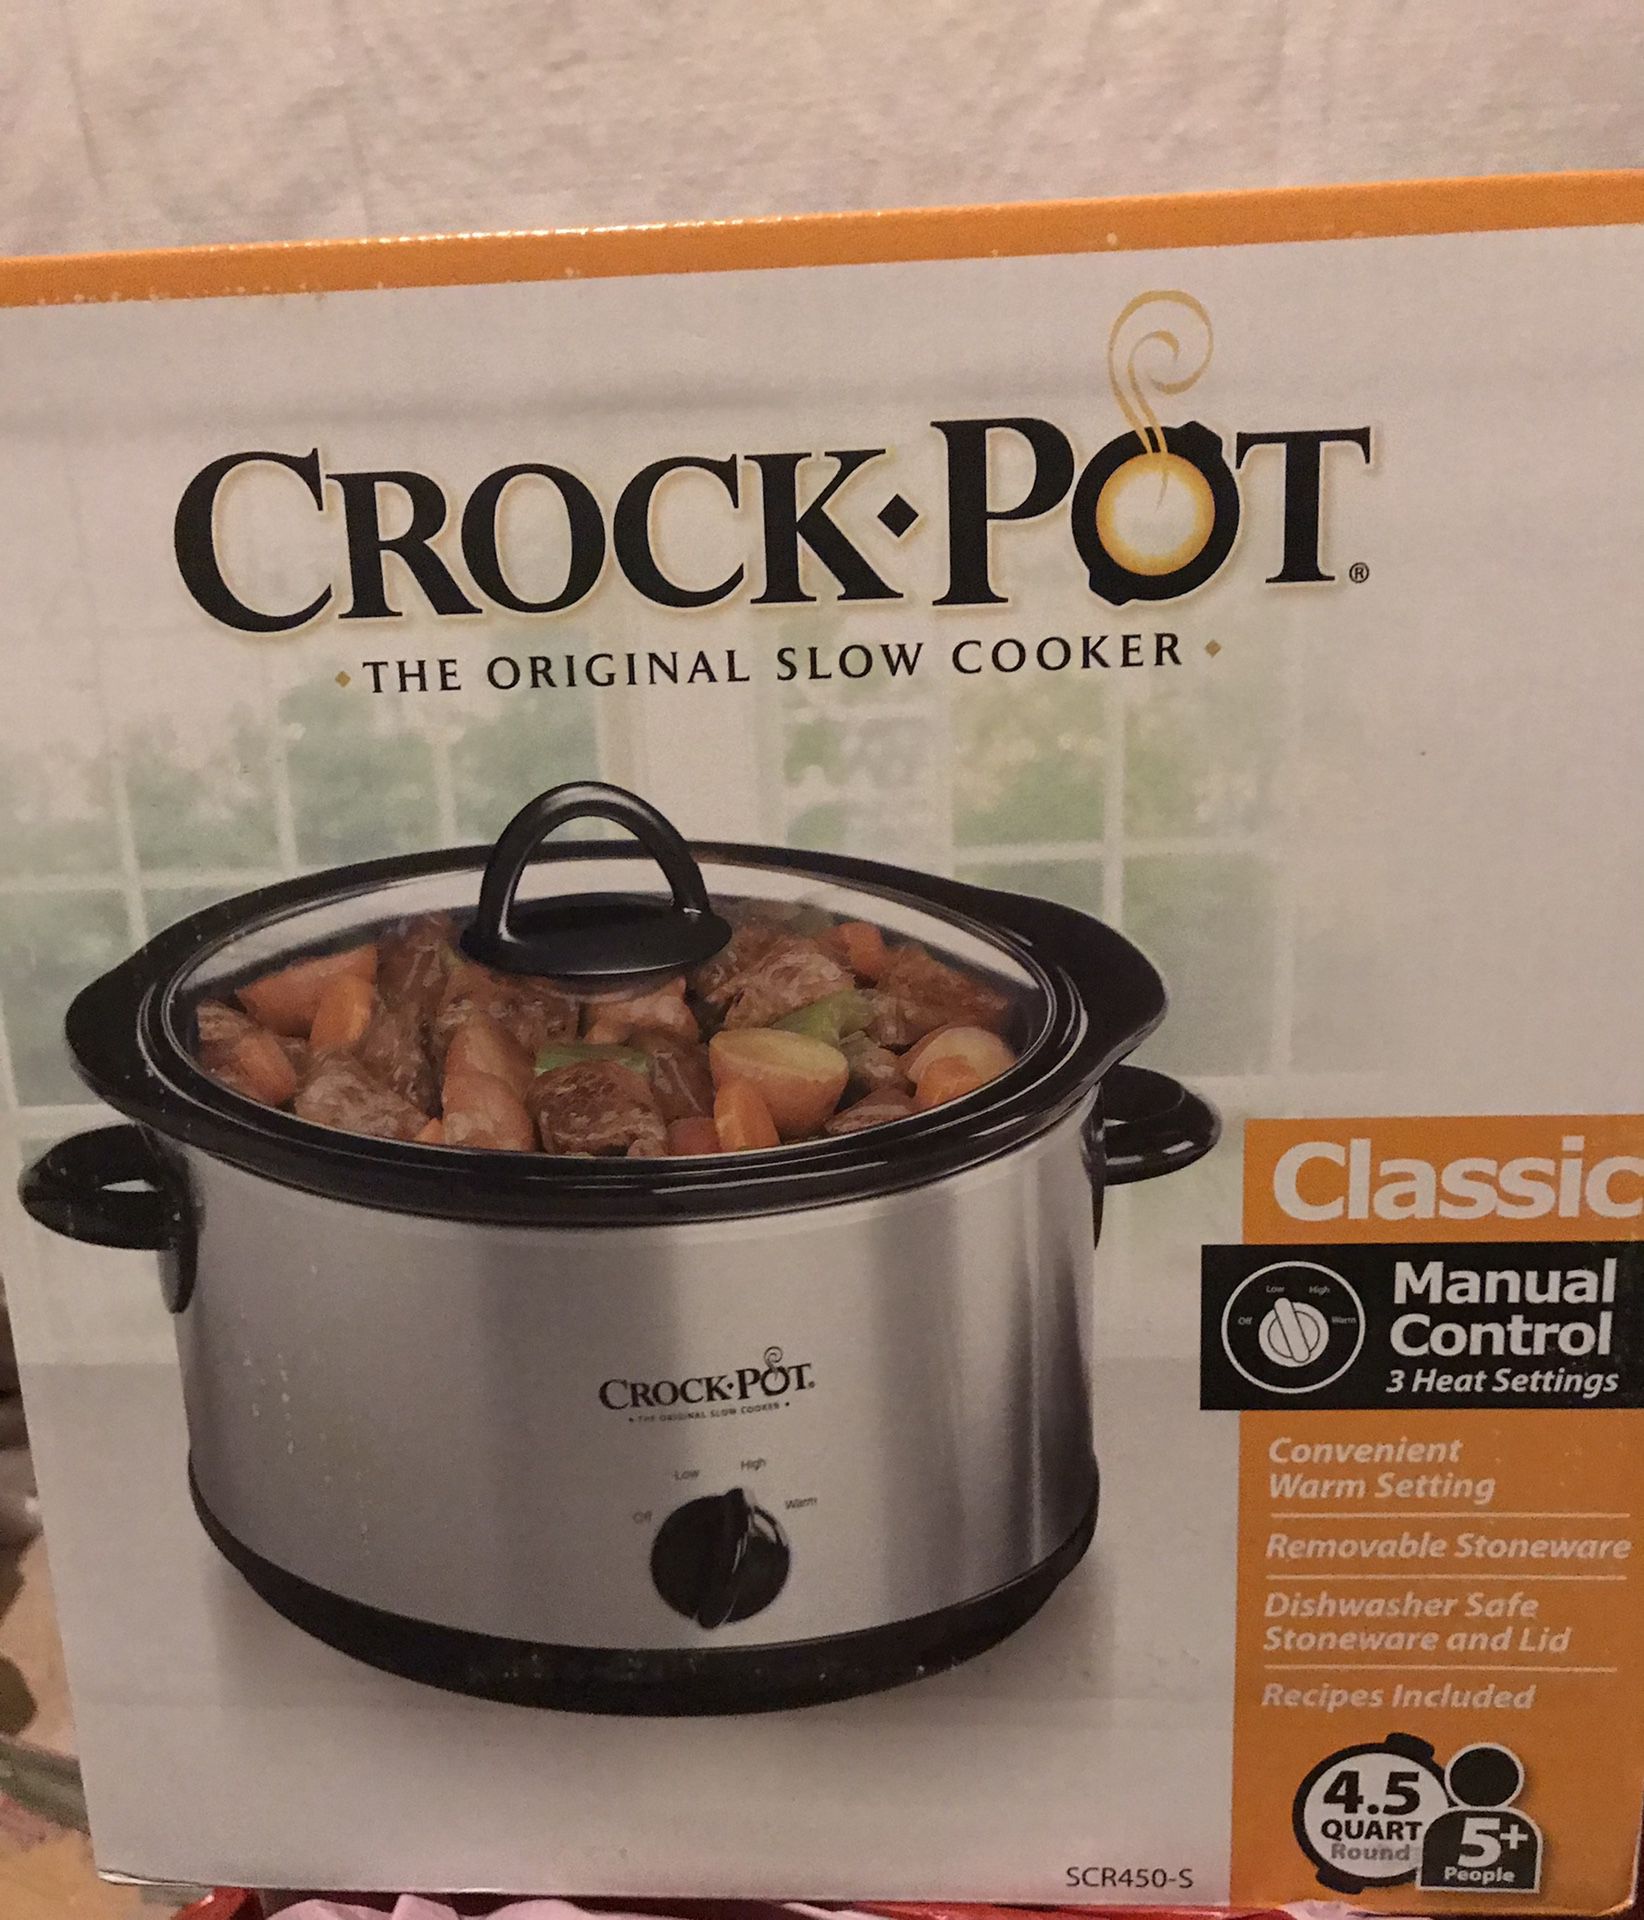 Brand new crock pot in box